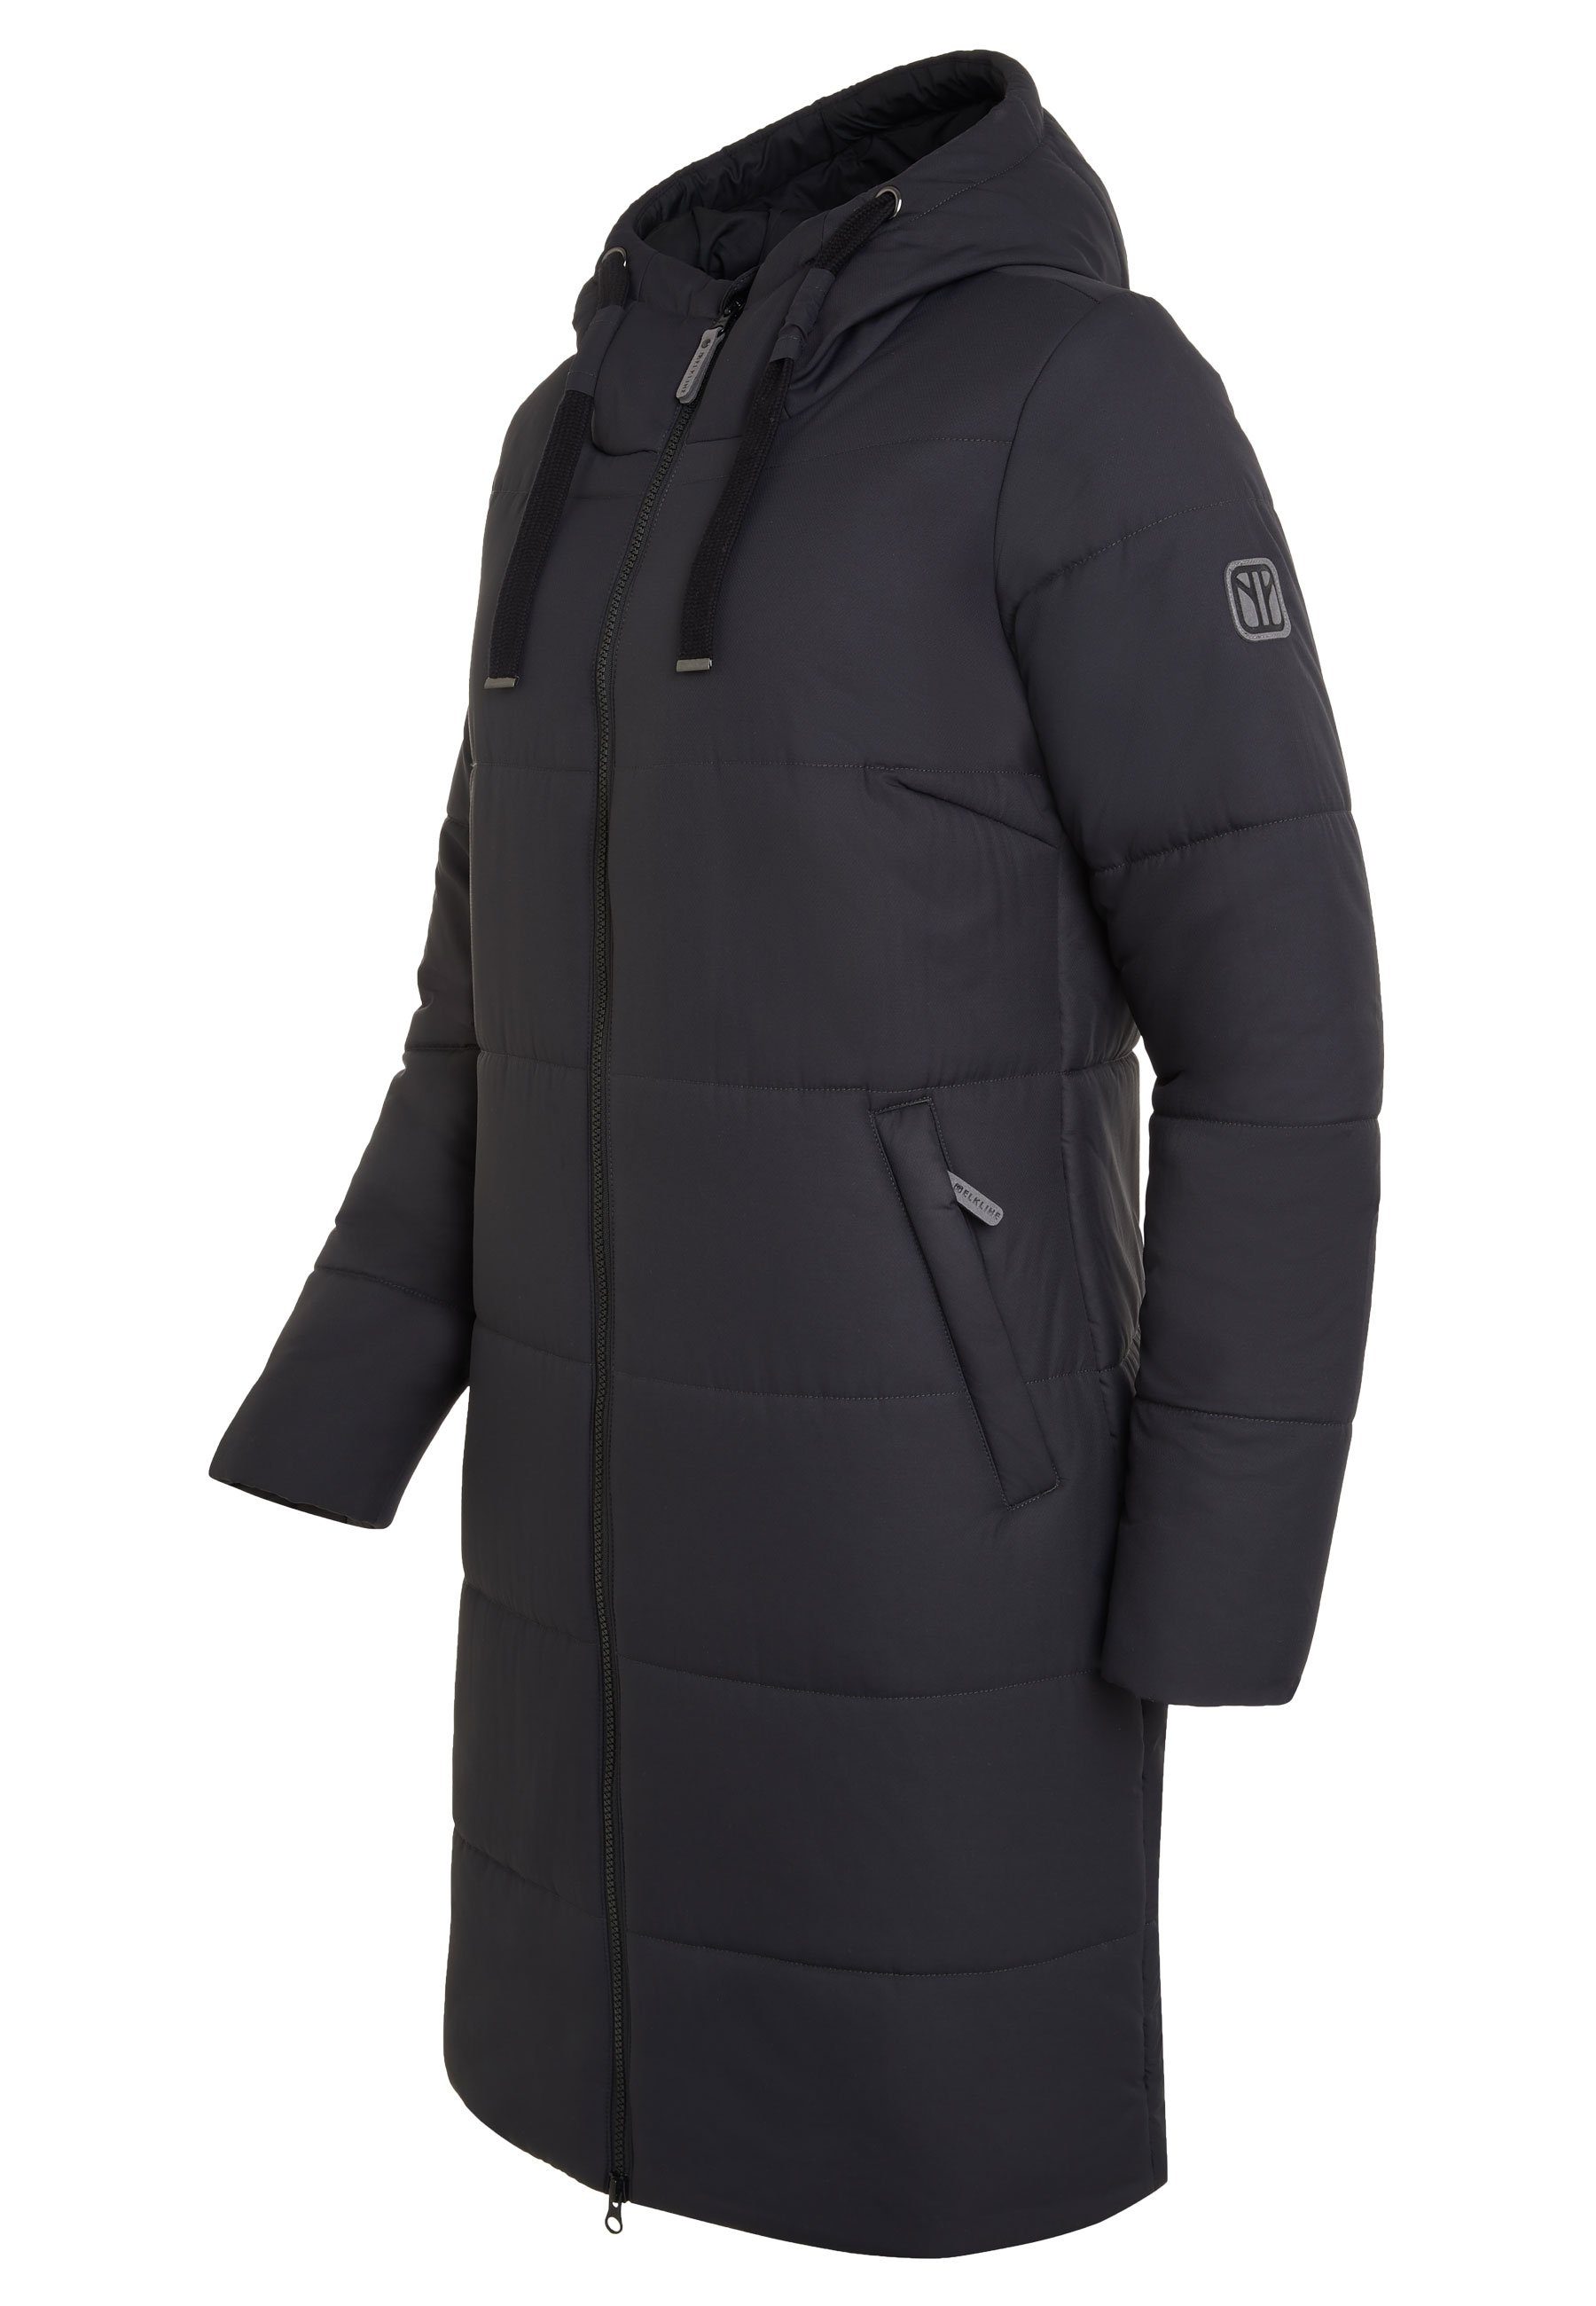 Elkline Winterjacke Comfort 2-Wege-Reißverschluss black Mantel, black leichter langer 